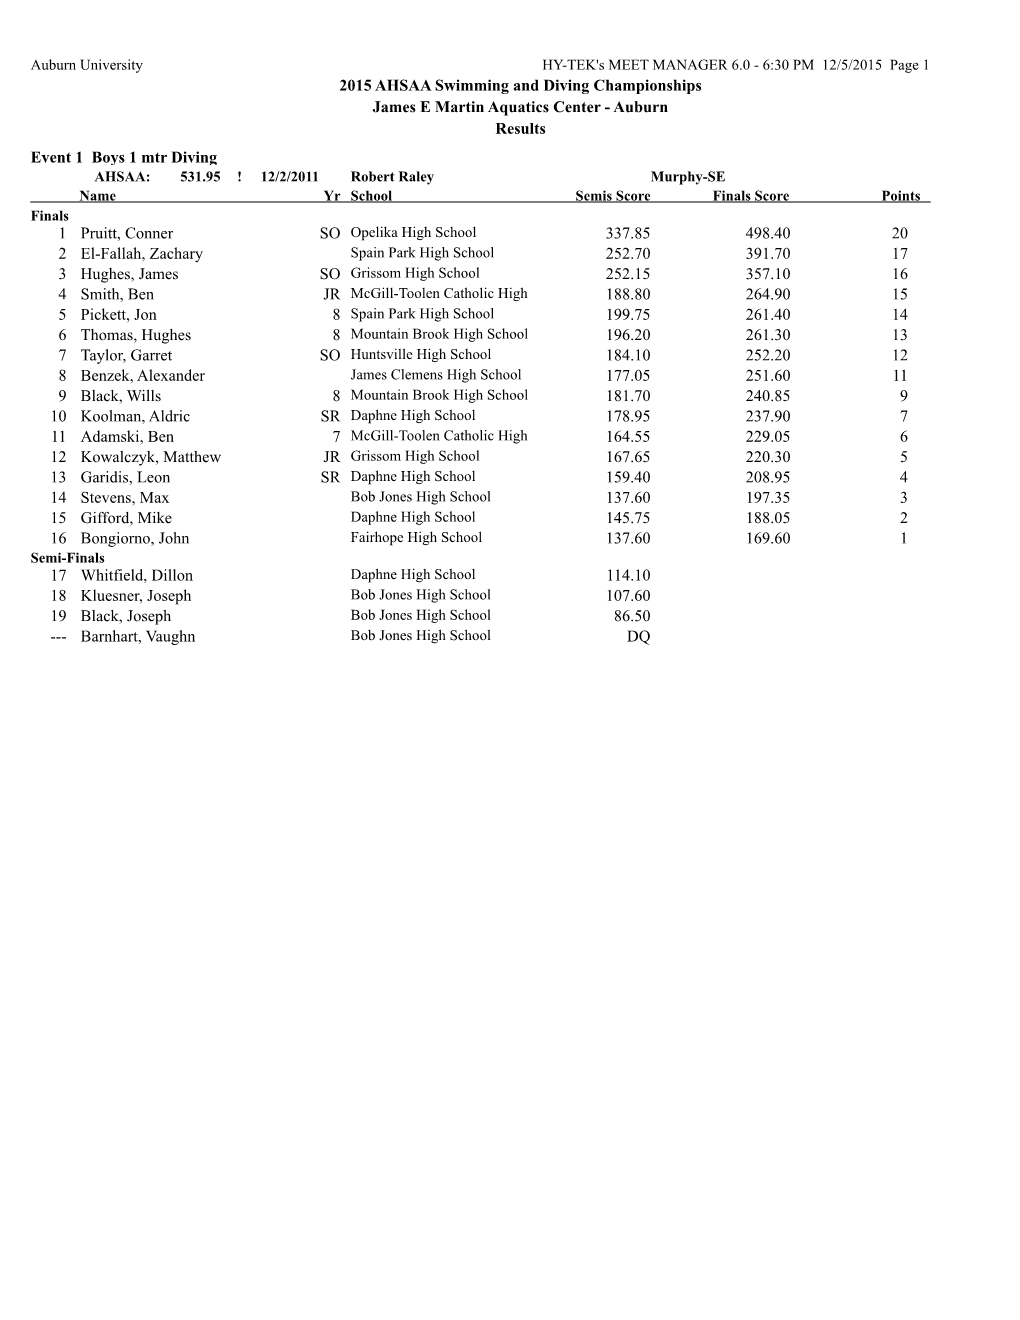 2015 AHSAA Swimming and Diving Championships James E Martin Aquatics Center - Auburn Results